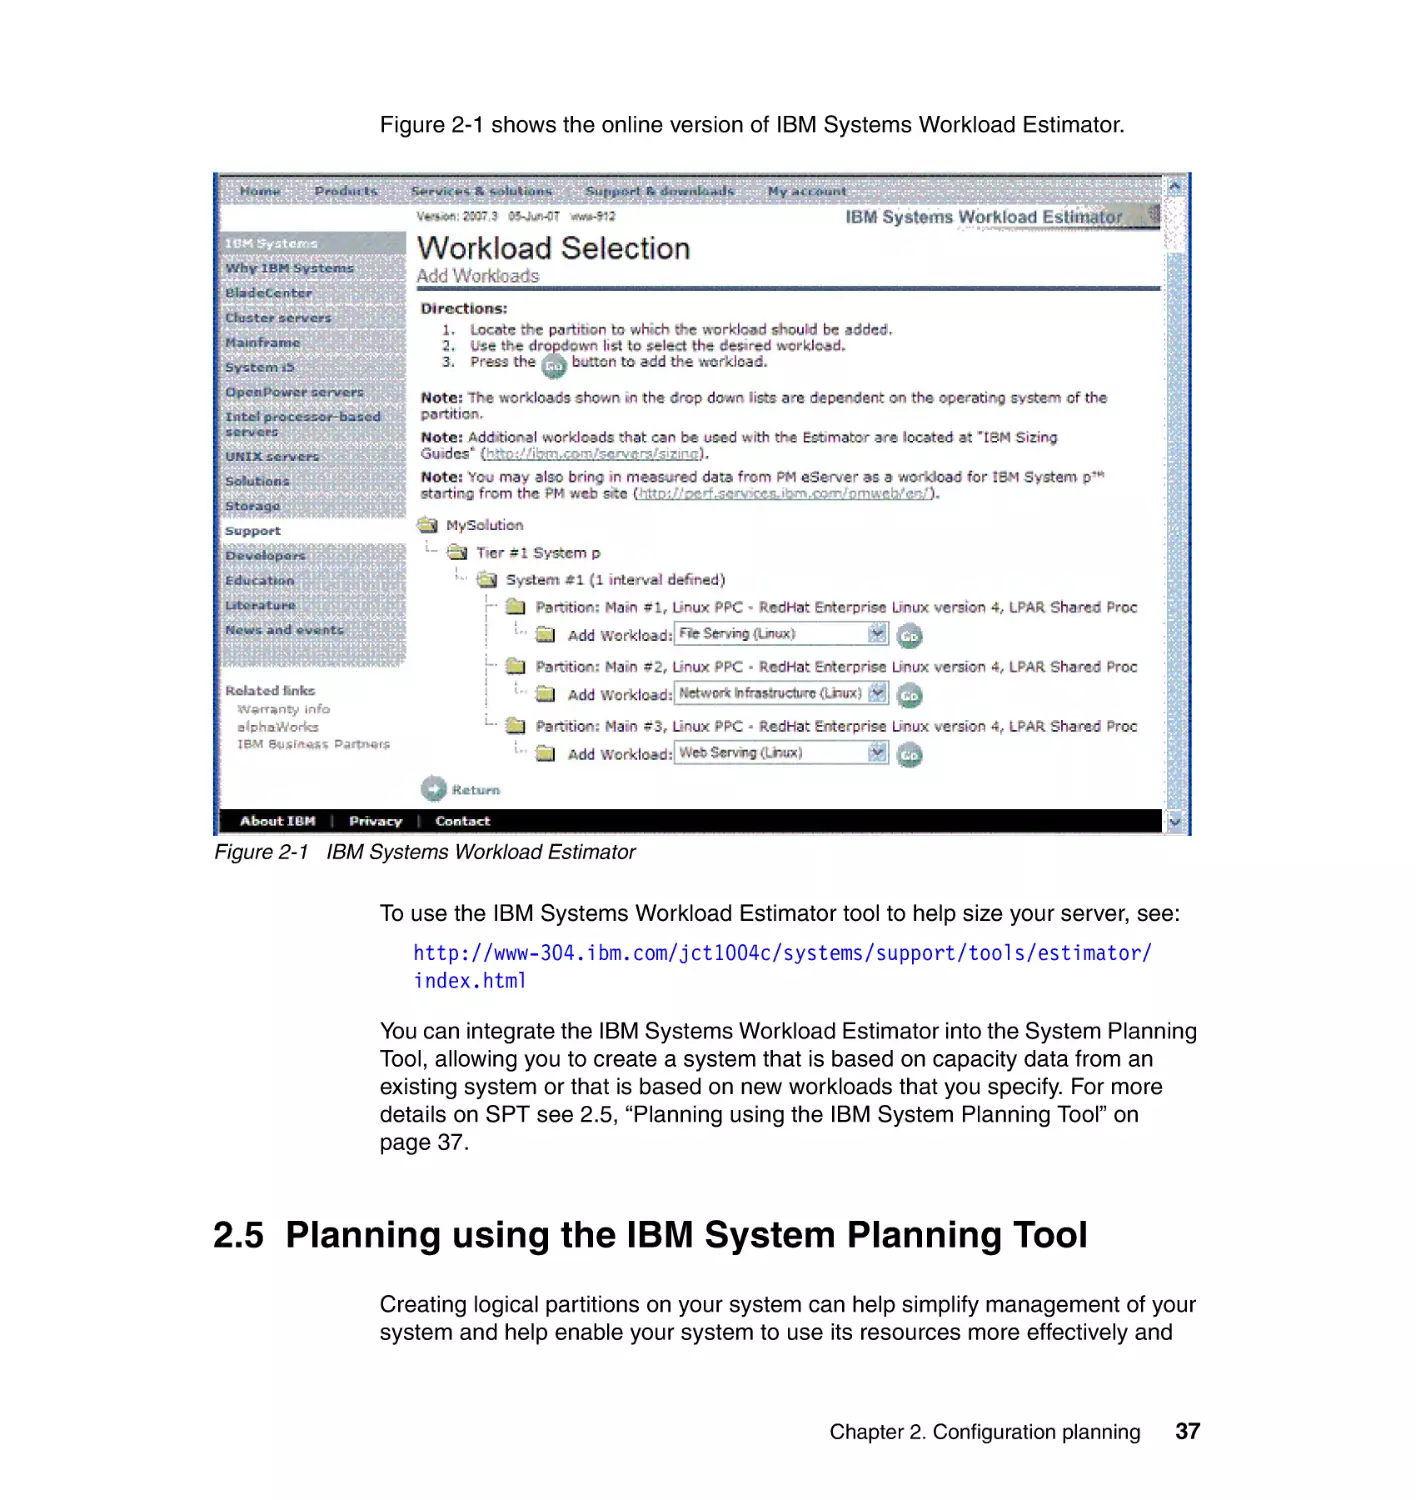 2.5 Planning using the IBM System Planning Tool